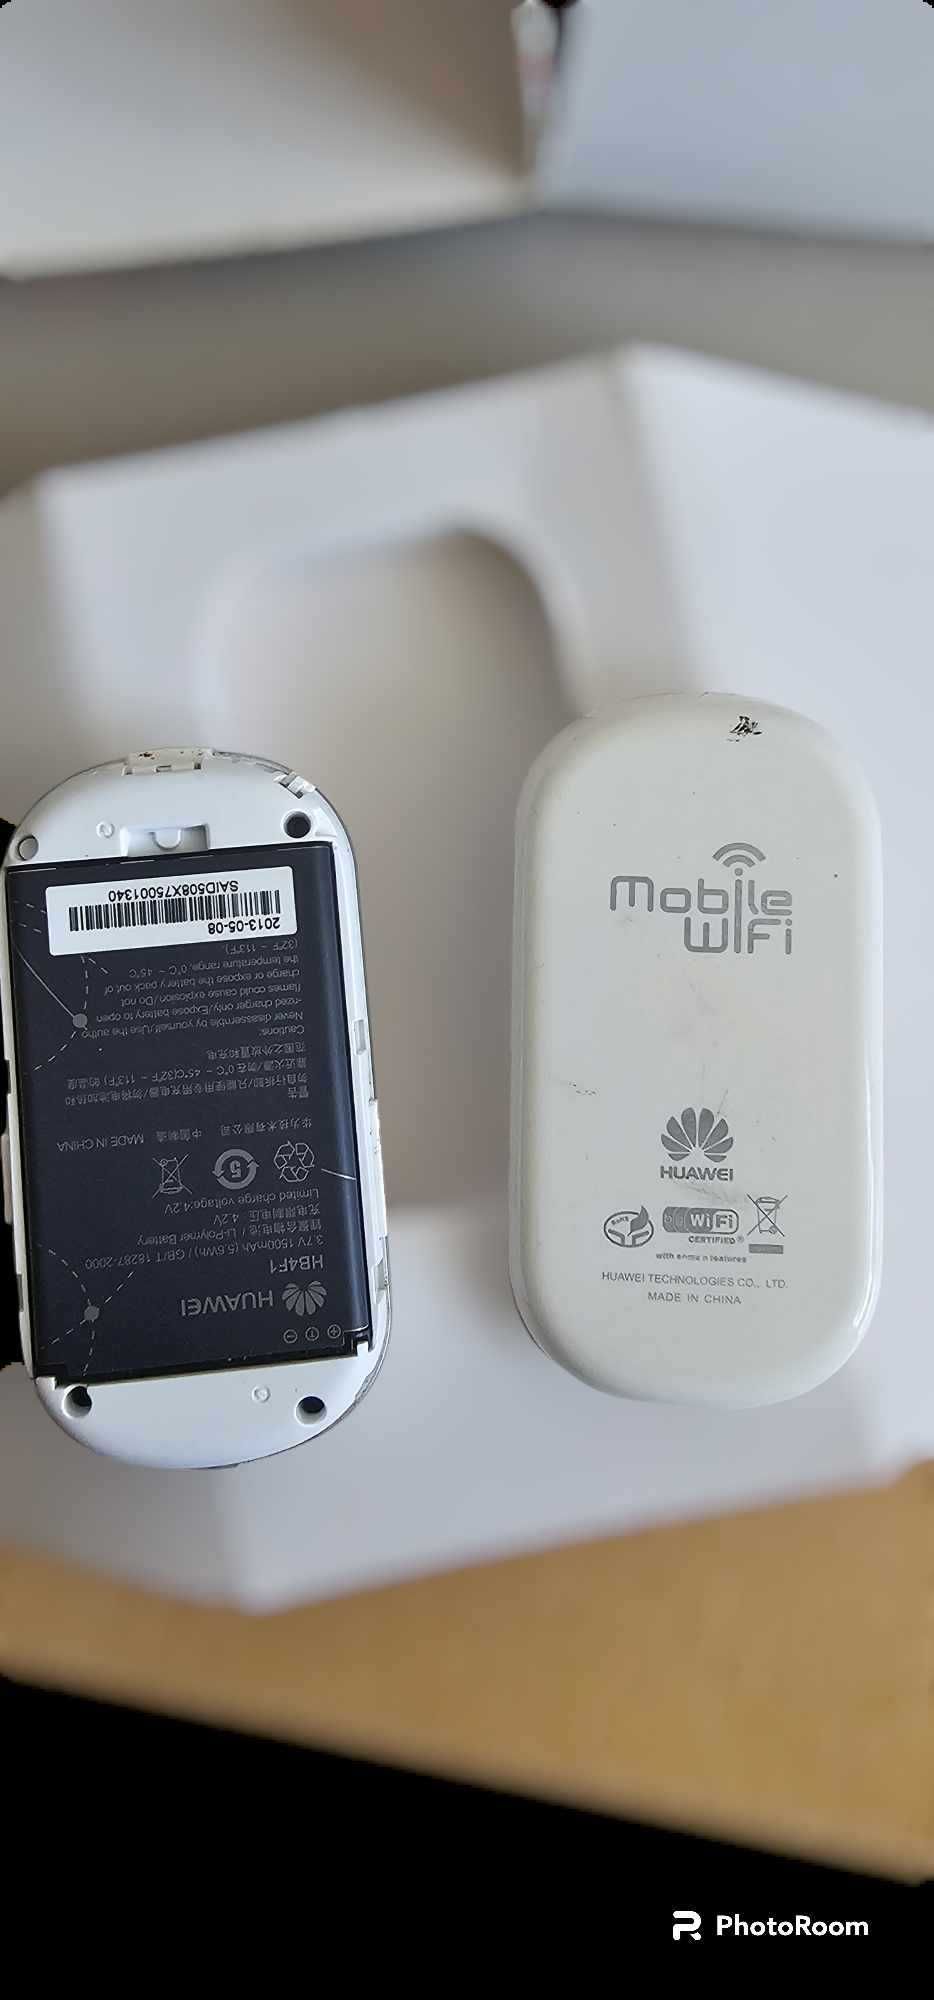 Router/Modem 3G Huawei E586 HSPA+ WiFi 21Mbps